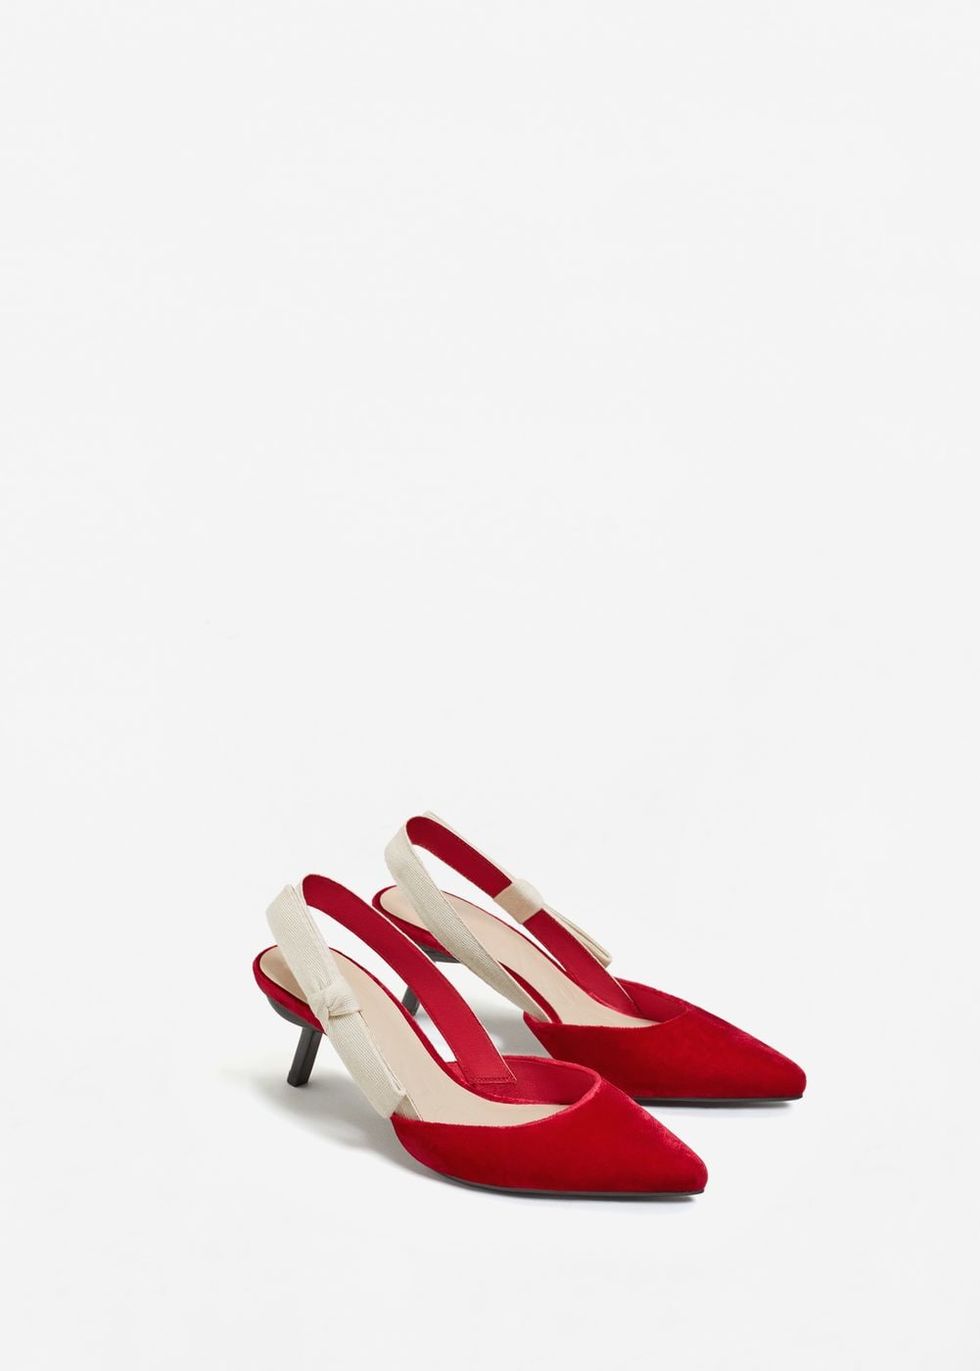 Carmine, High heels, Dancing shoe, Basic pump, Dress shoe, Bridal shoe, Leather, Court shoe, Synthetic rubber, Sandal, 